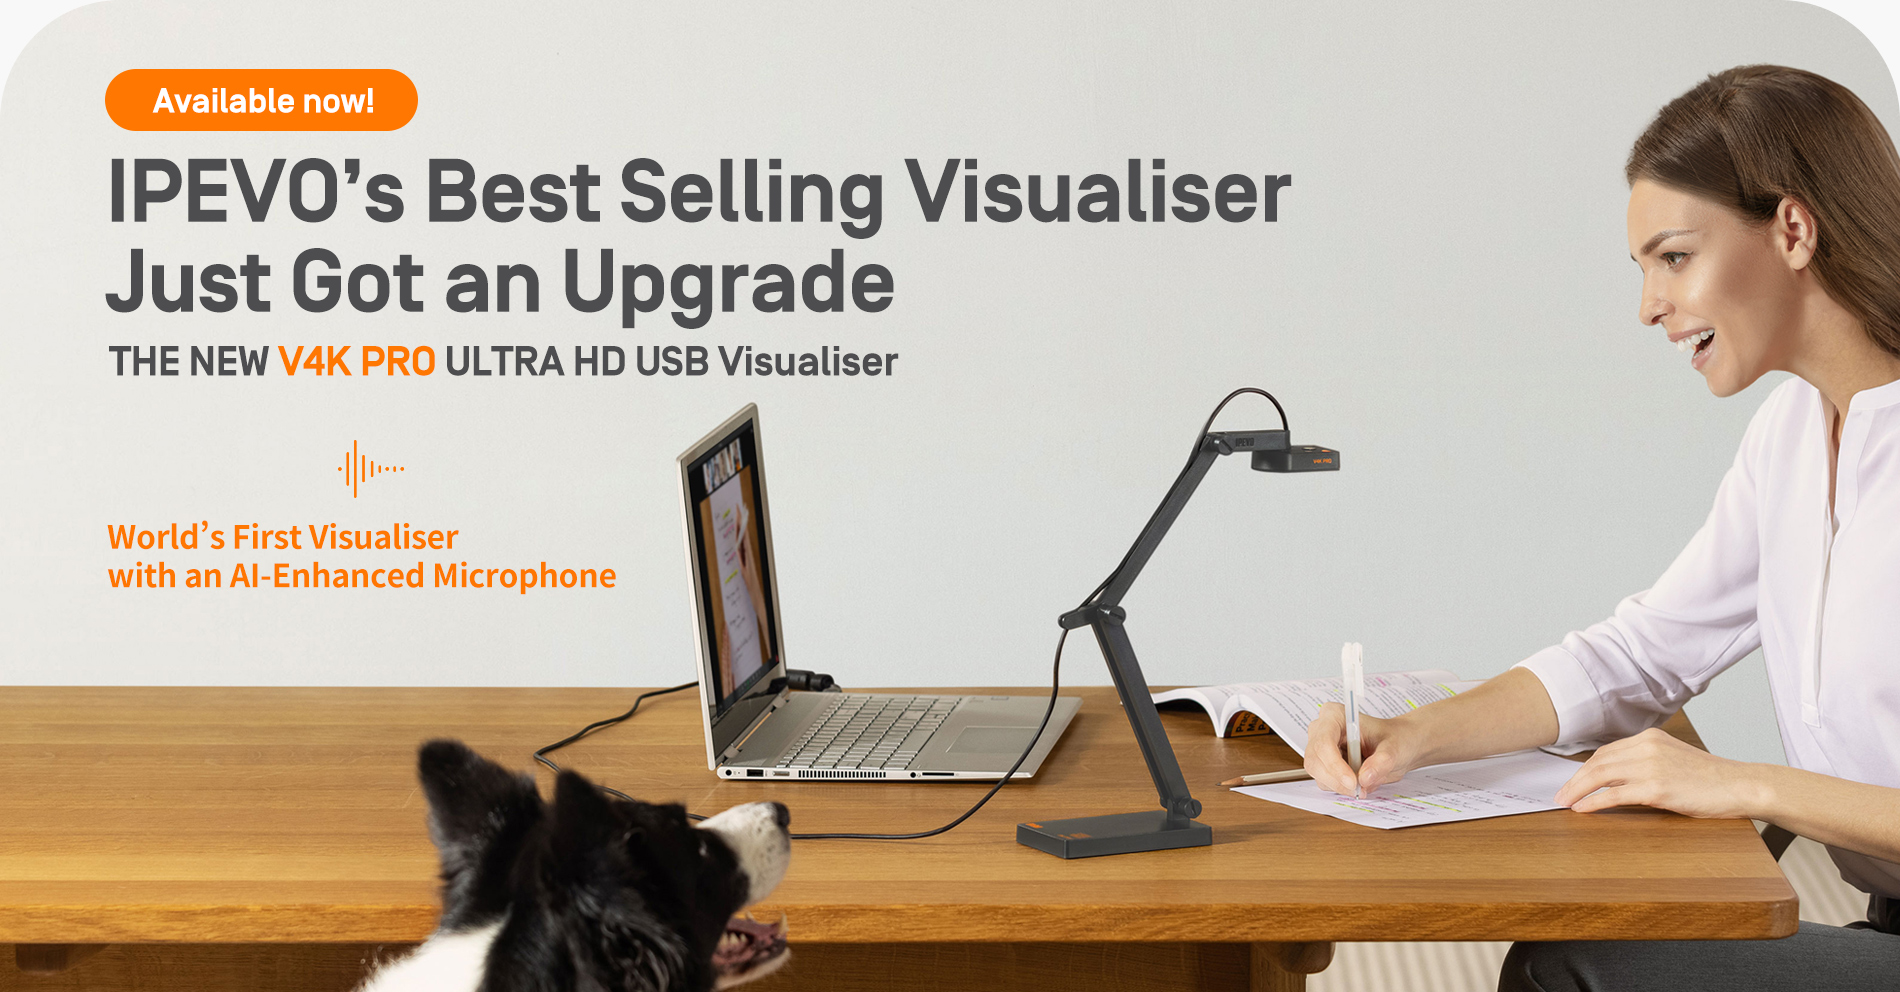 IPEVO’s Best Selling Visualiser Just Got an Upgrade.
											